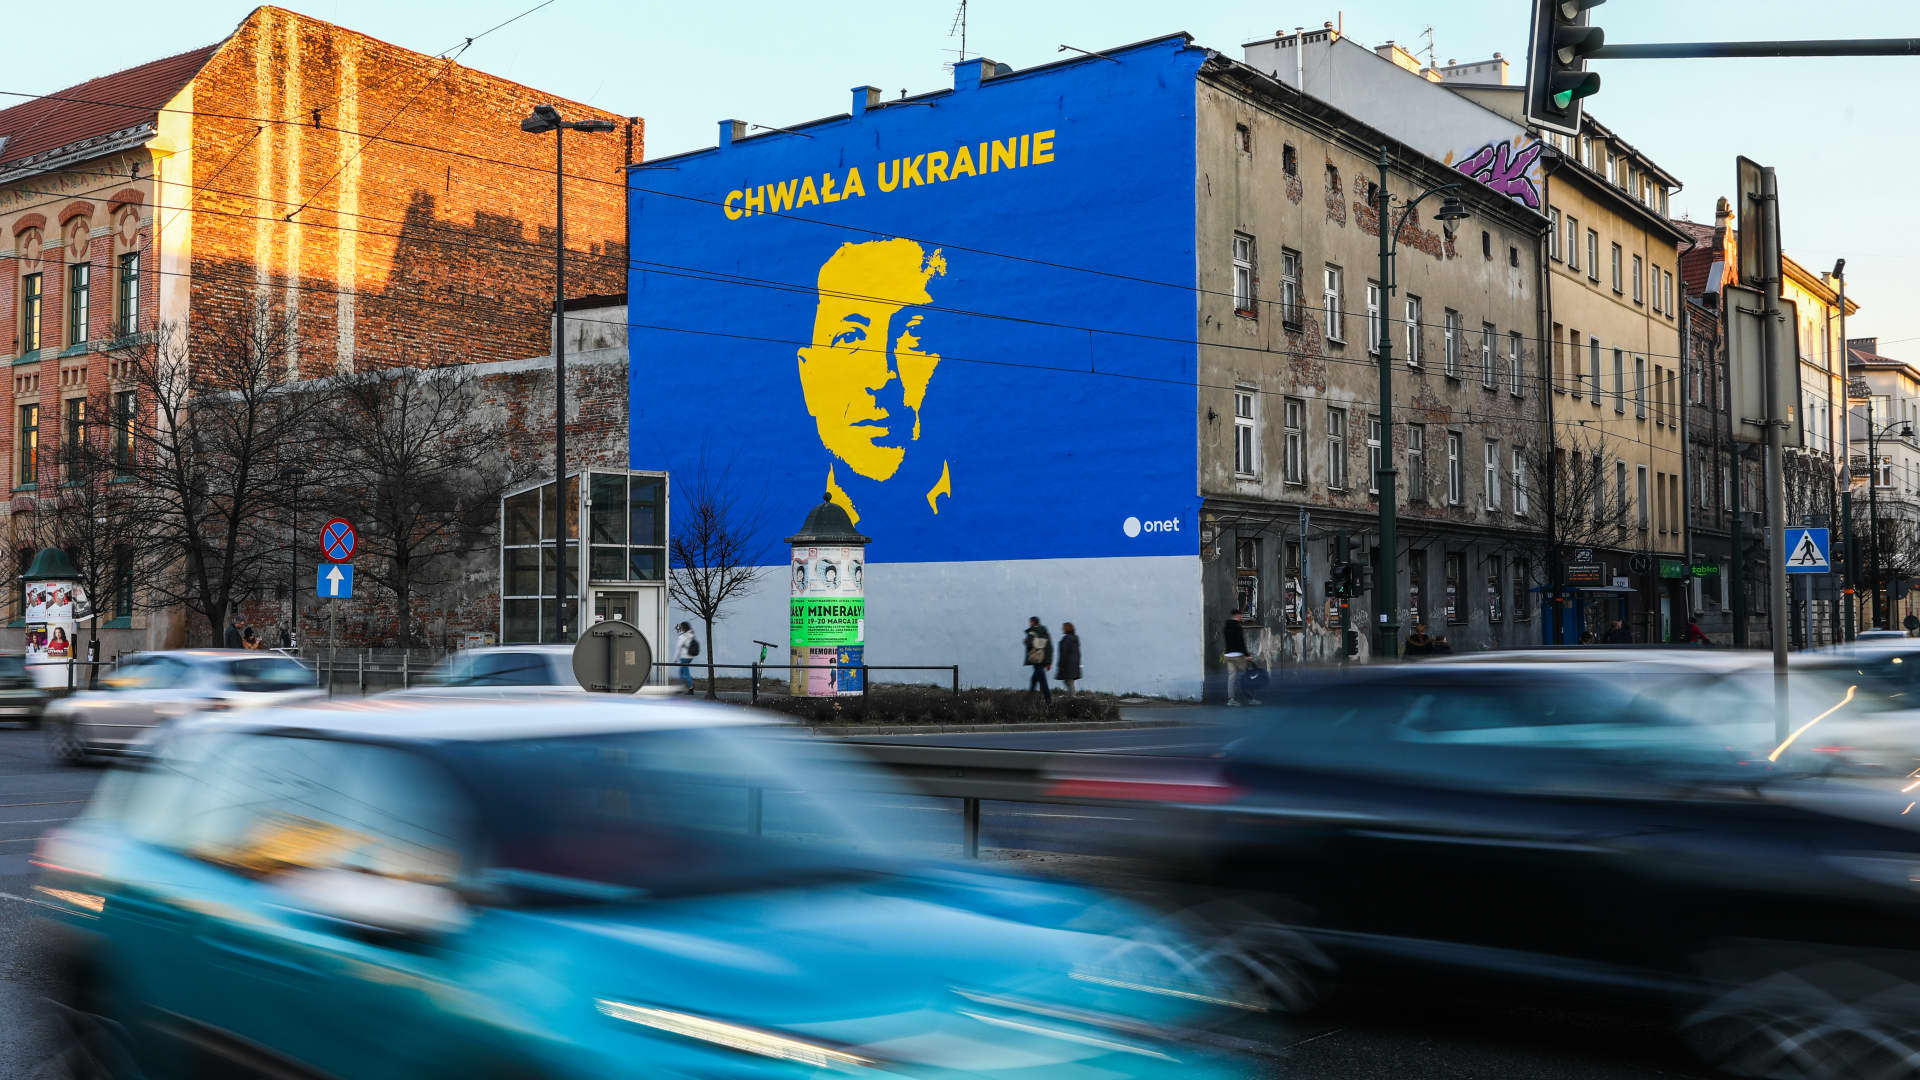 A mural depicting Ukrainian president Volodymyr Zelenskyy and 'Glory to Ukraine' slogan written in Polish is seen in Krakow, Poland on 22 March, 2022.